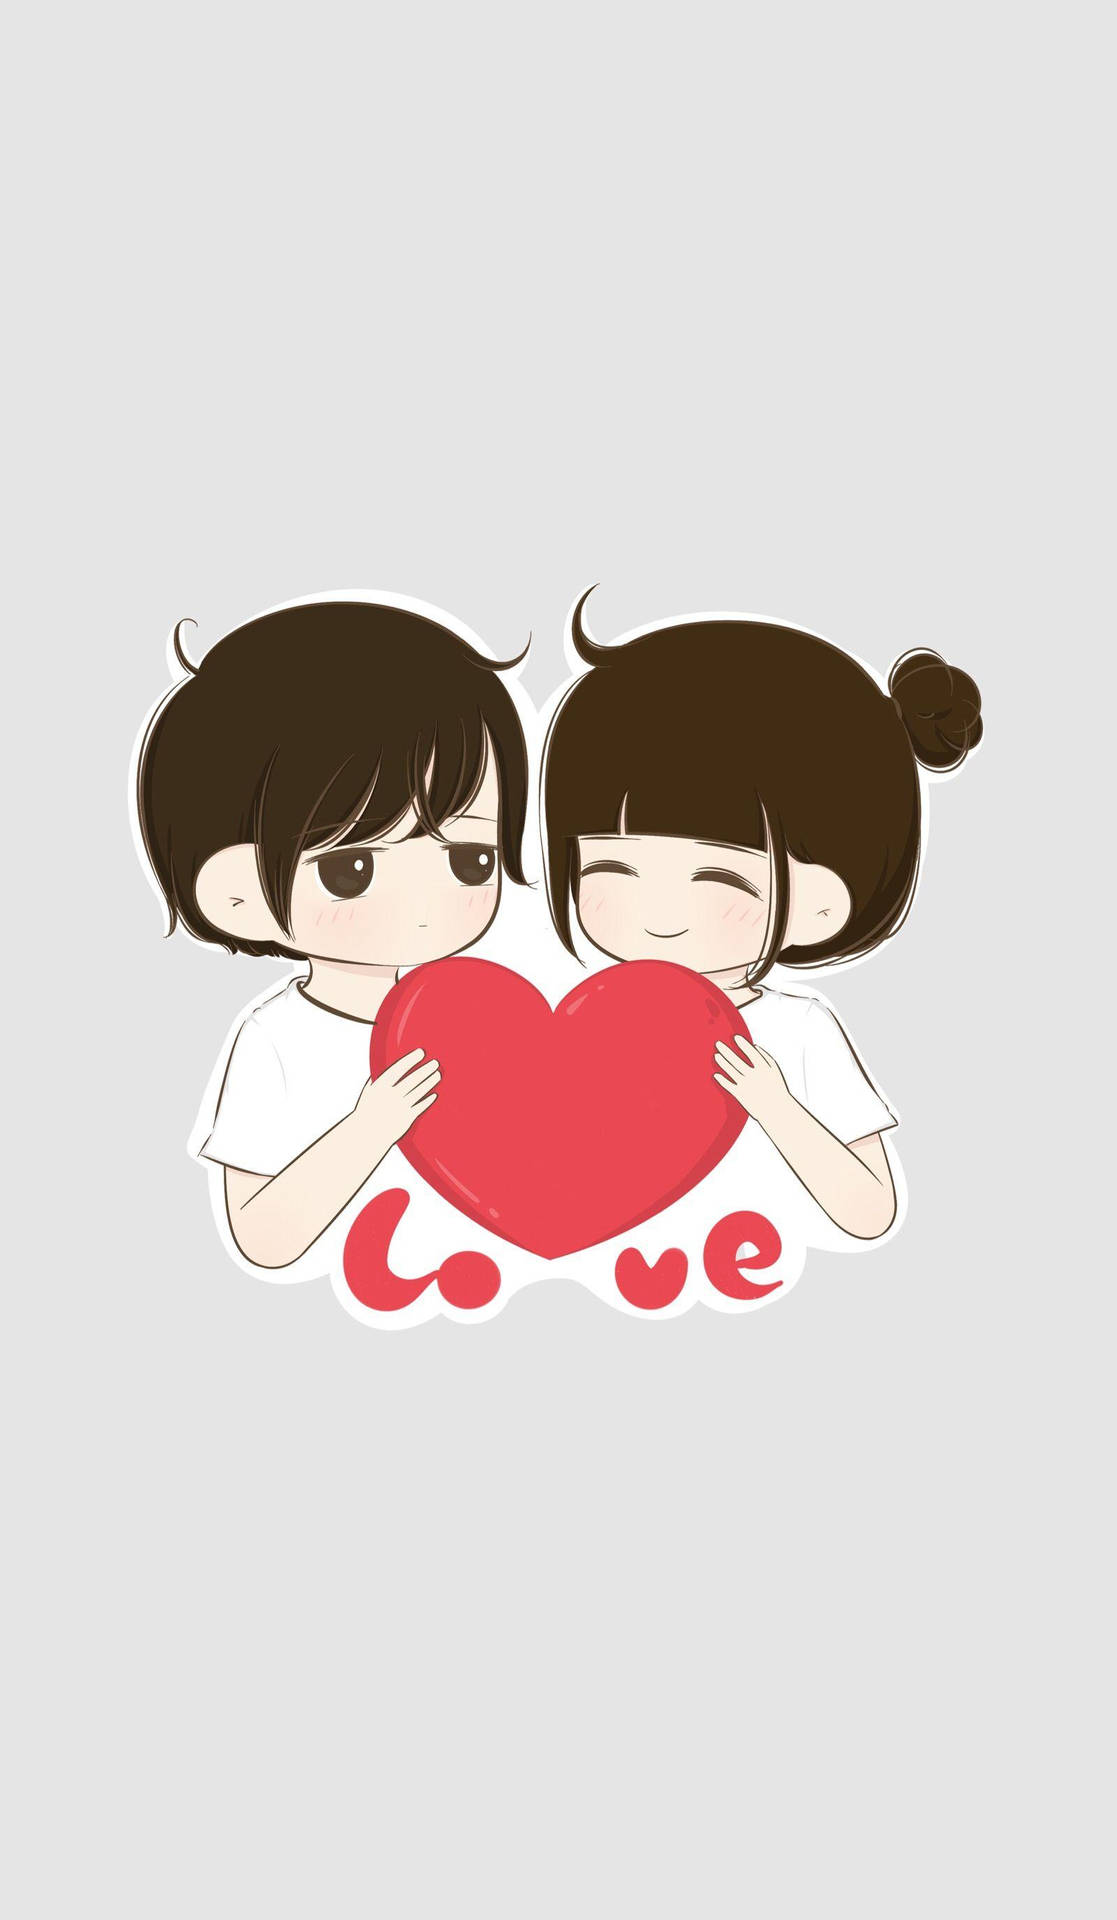 Cute Cartoon Couple Holding Heart